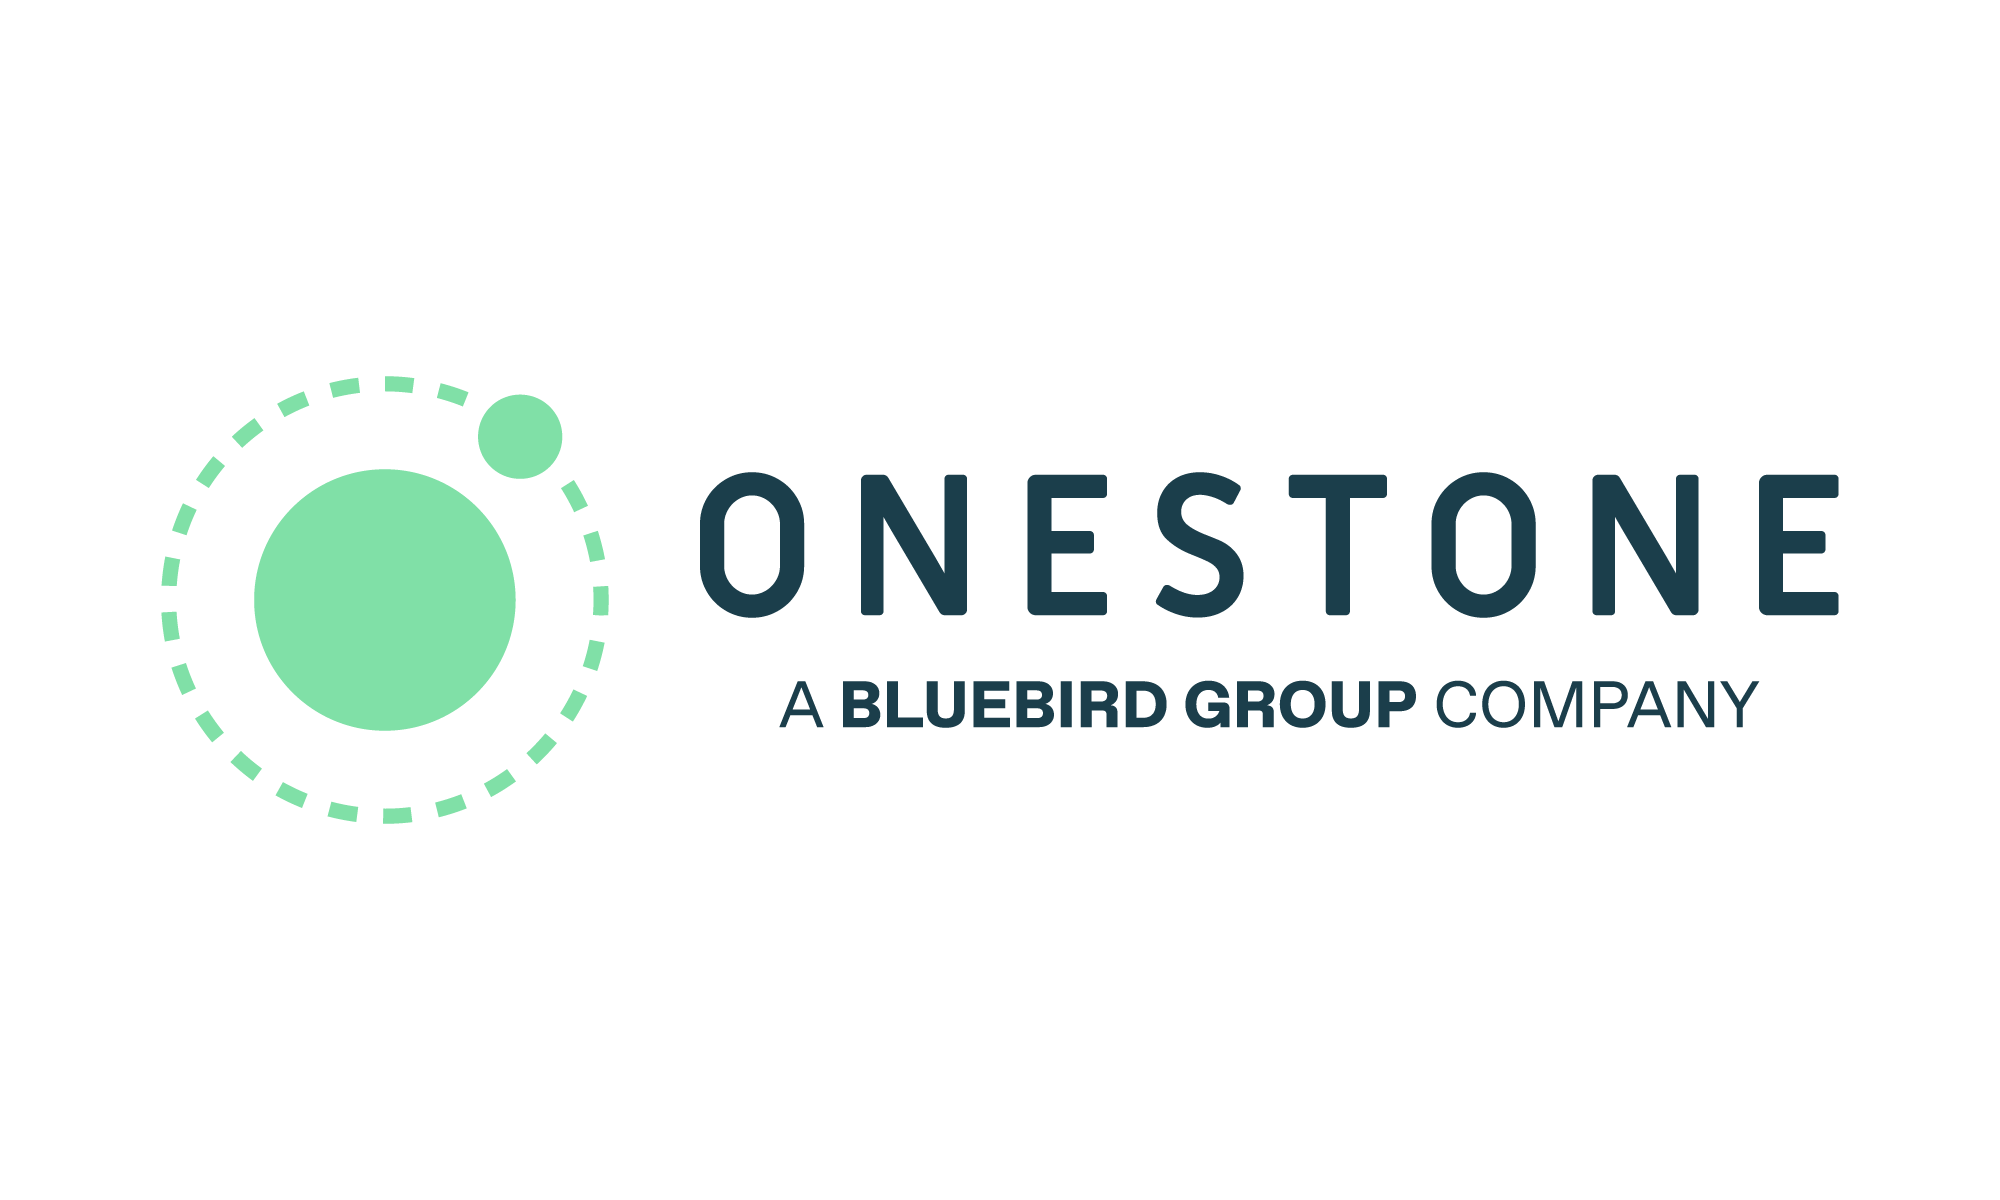 Onestone a Bluebird company logo